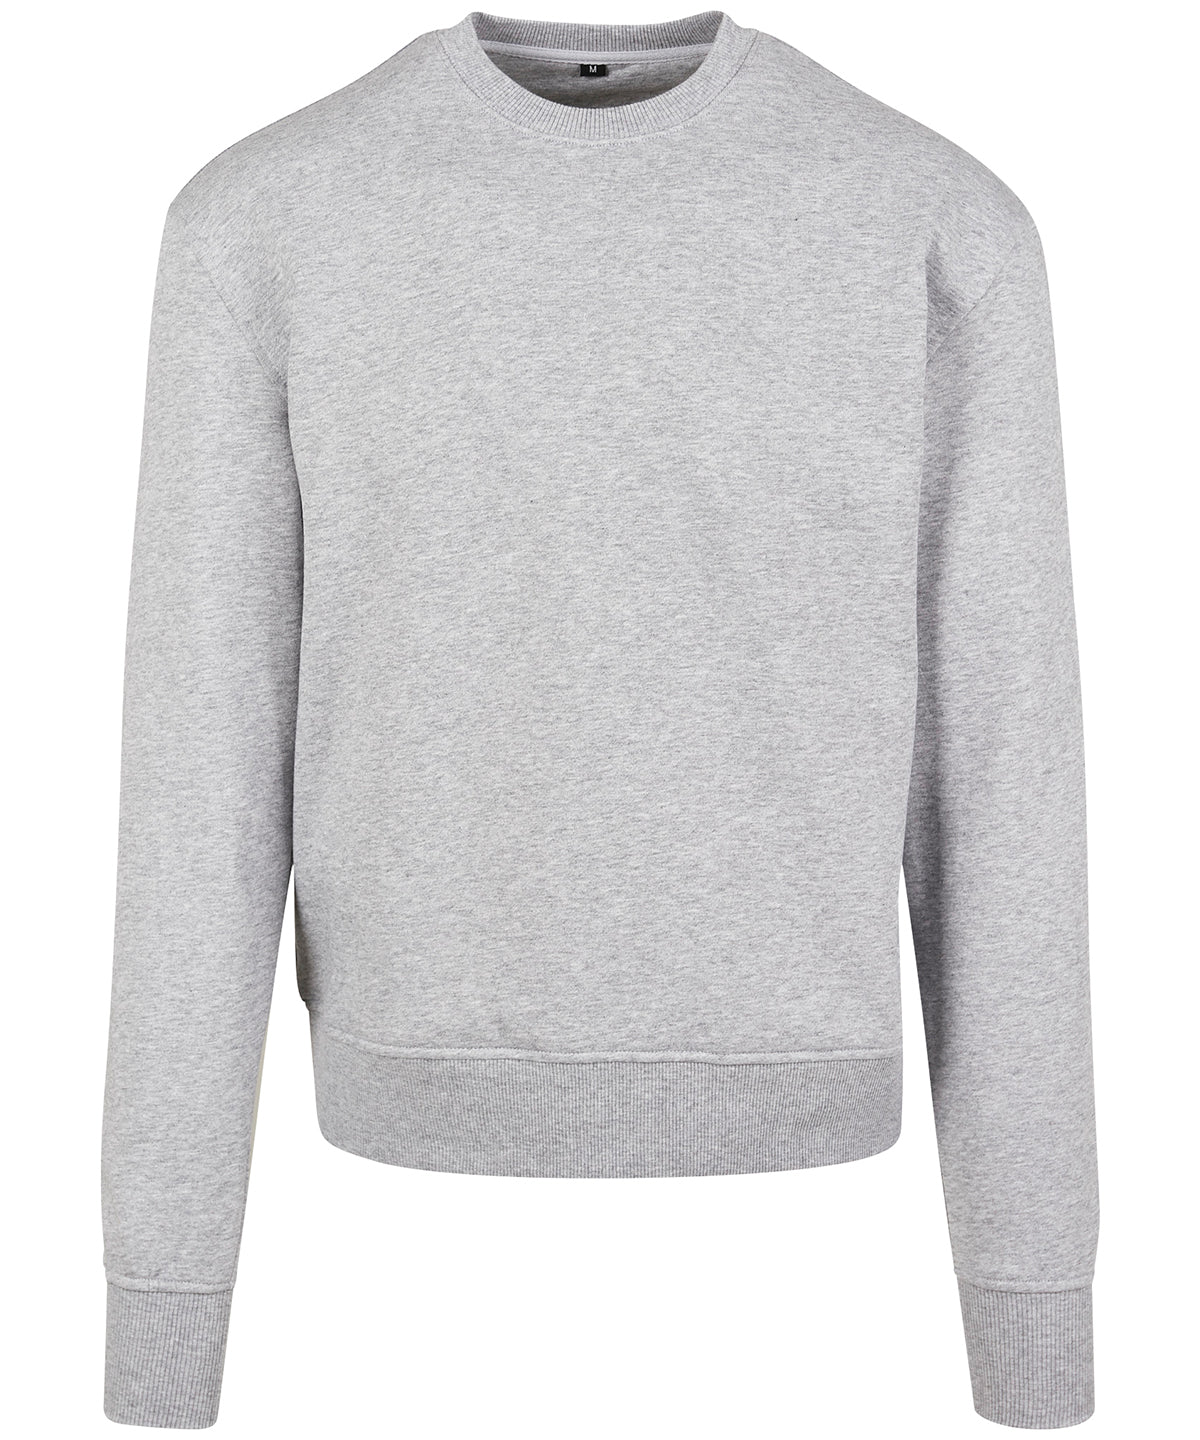 Personalised Sweatshirts - Black Build Your Brand Premium oversize crew neck